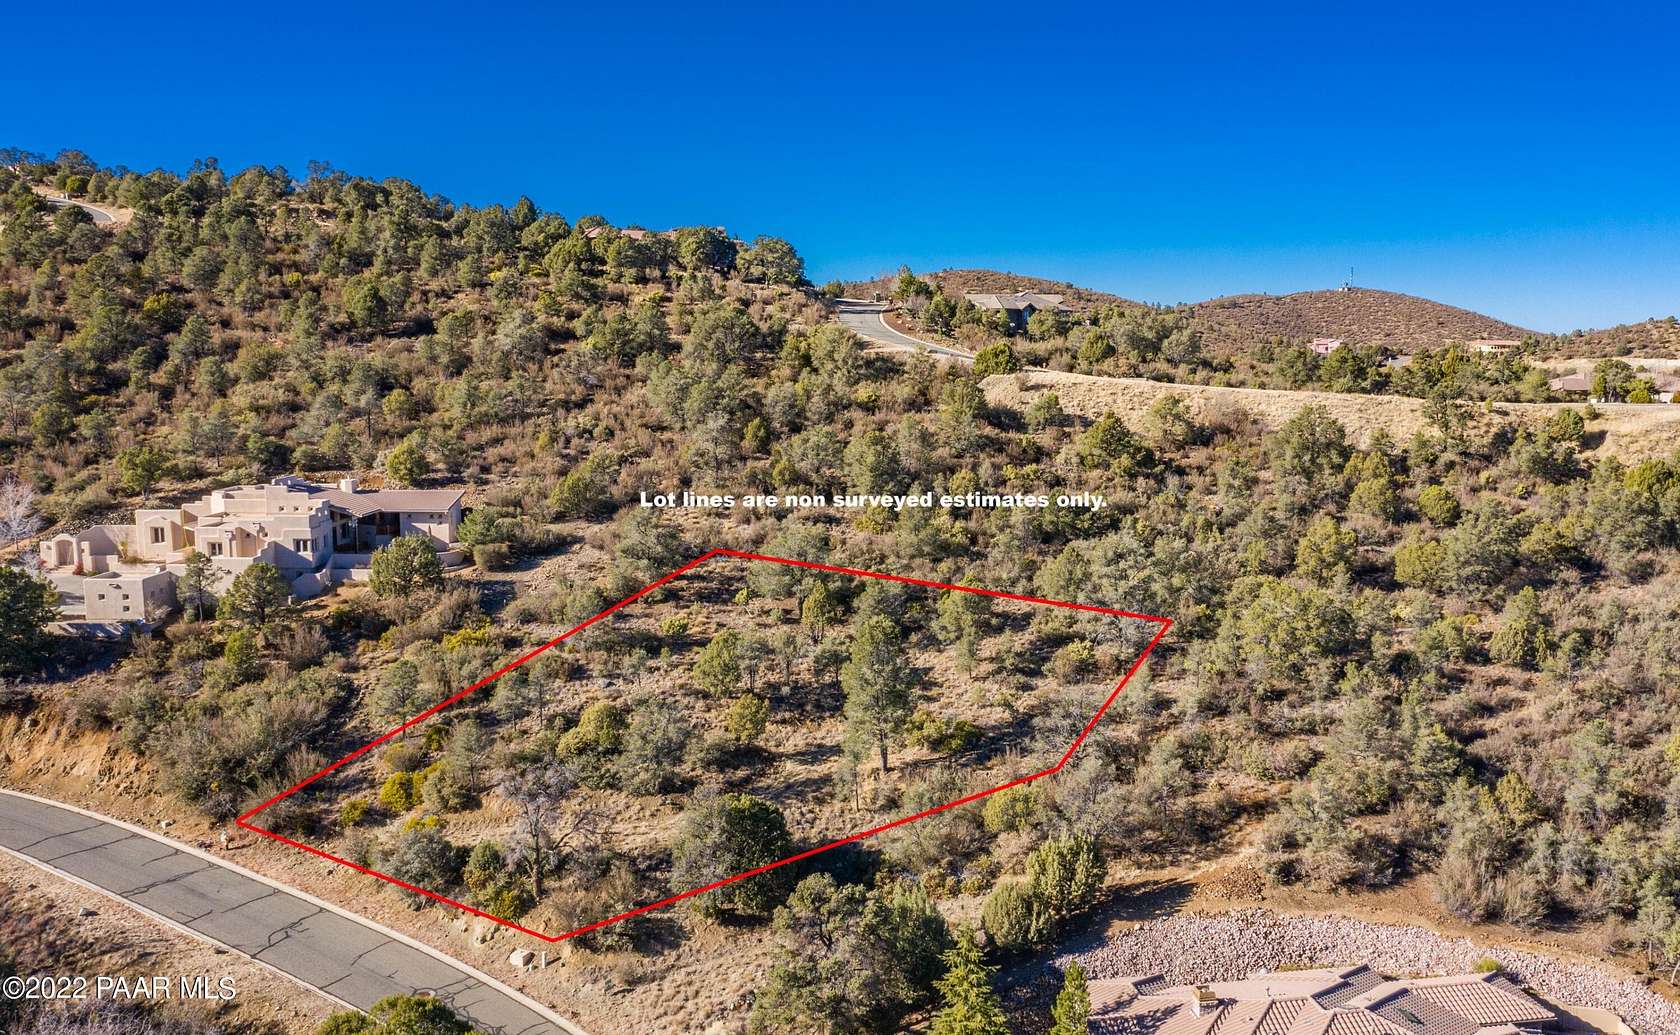 0.63 Acres of Residential Land for Sale in Prescott, Arizona